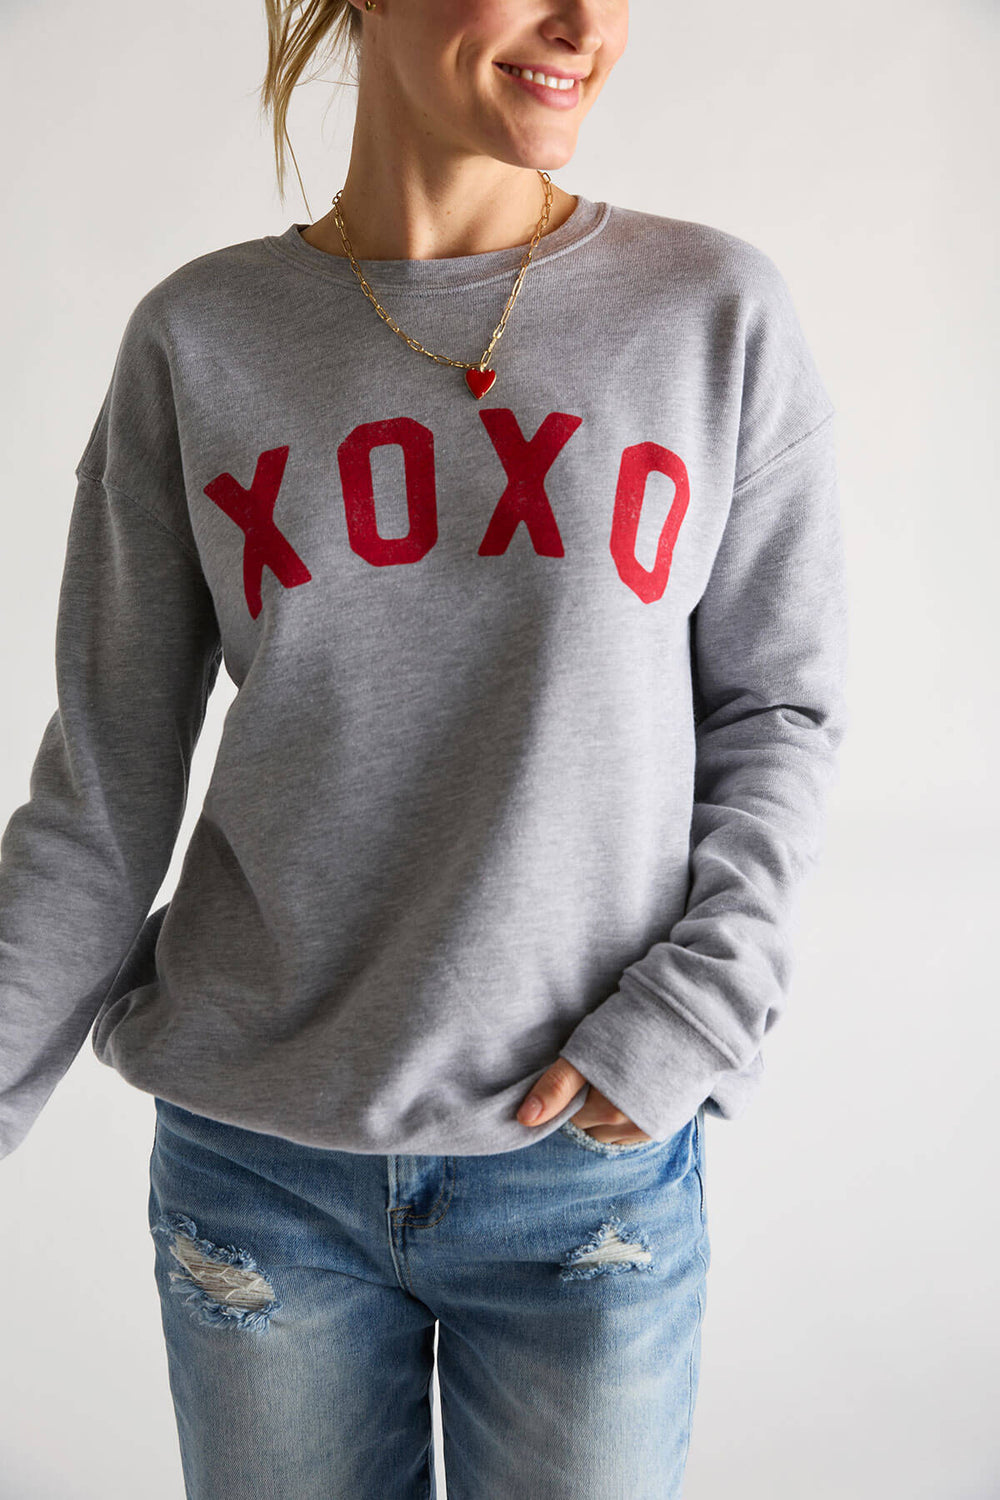 Oat Collective Xoxo Sweatshirt | Athletic Heather | Size Large